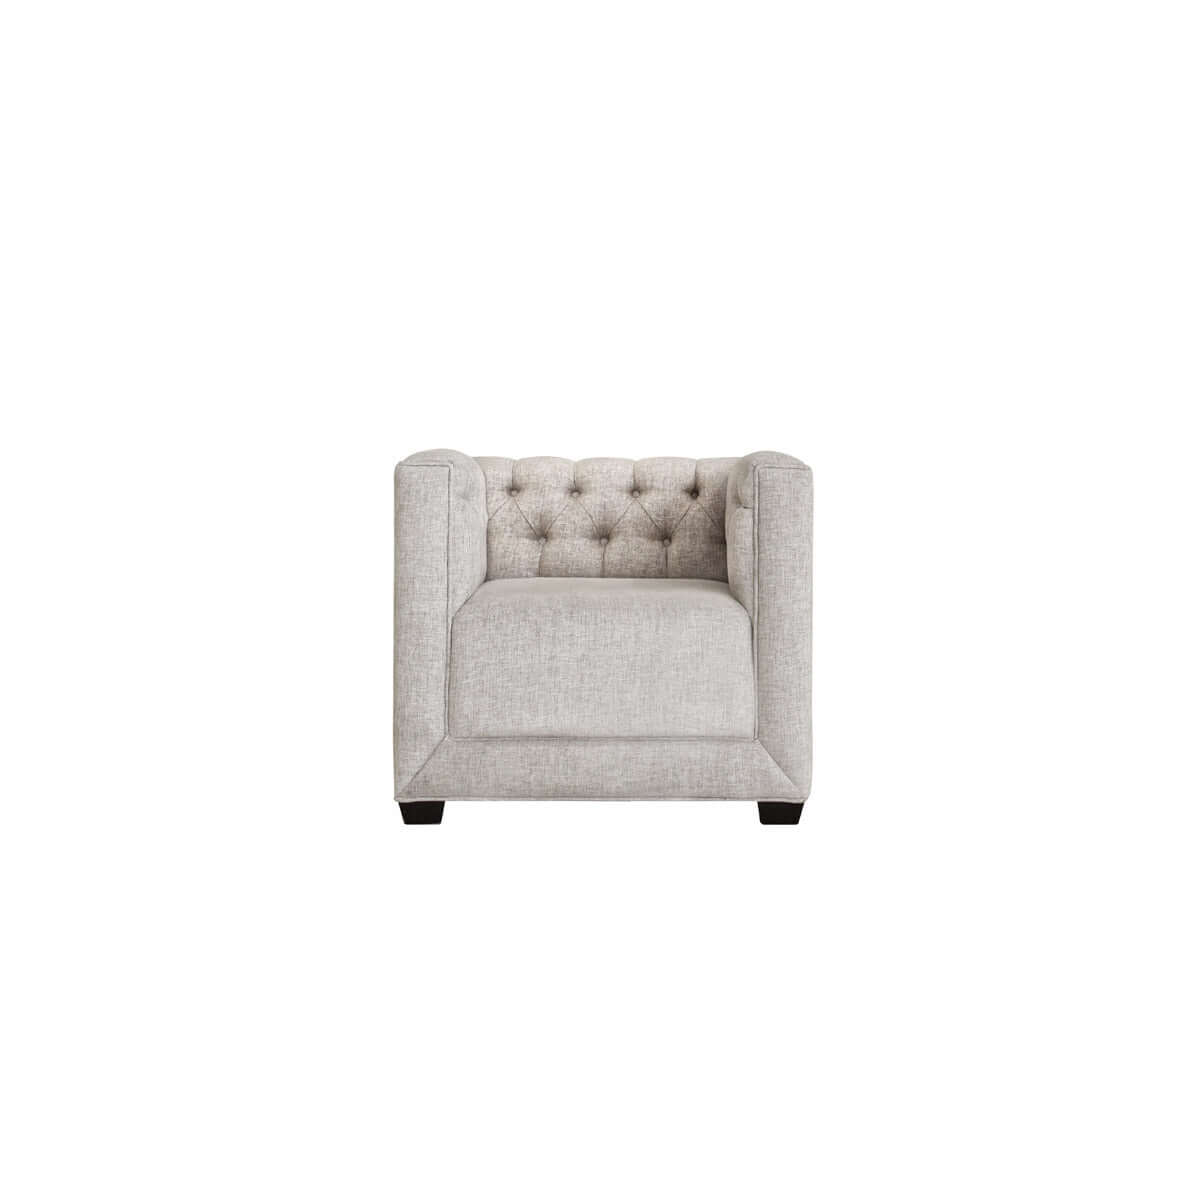 Hampton 1 seat tufted, classic and stylish sofa